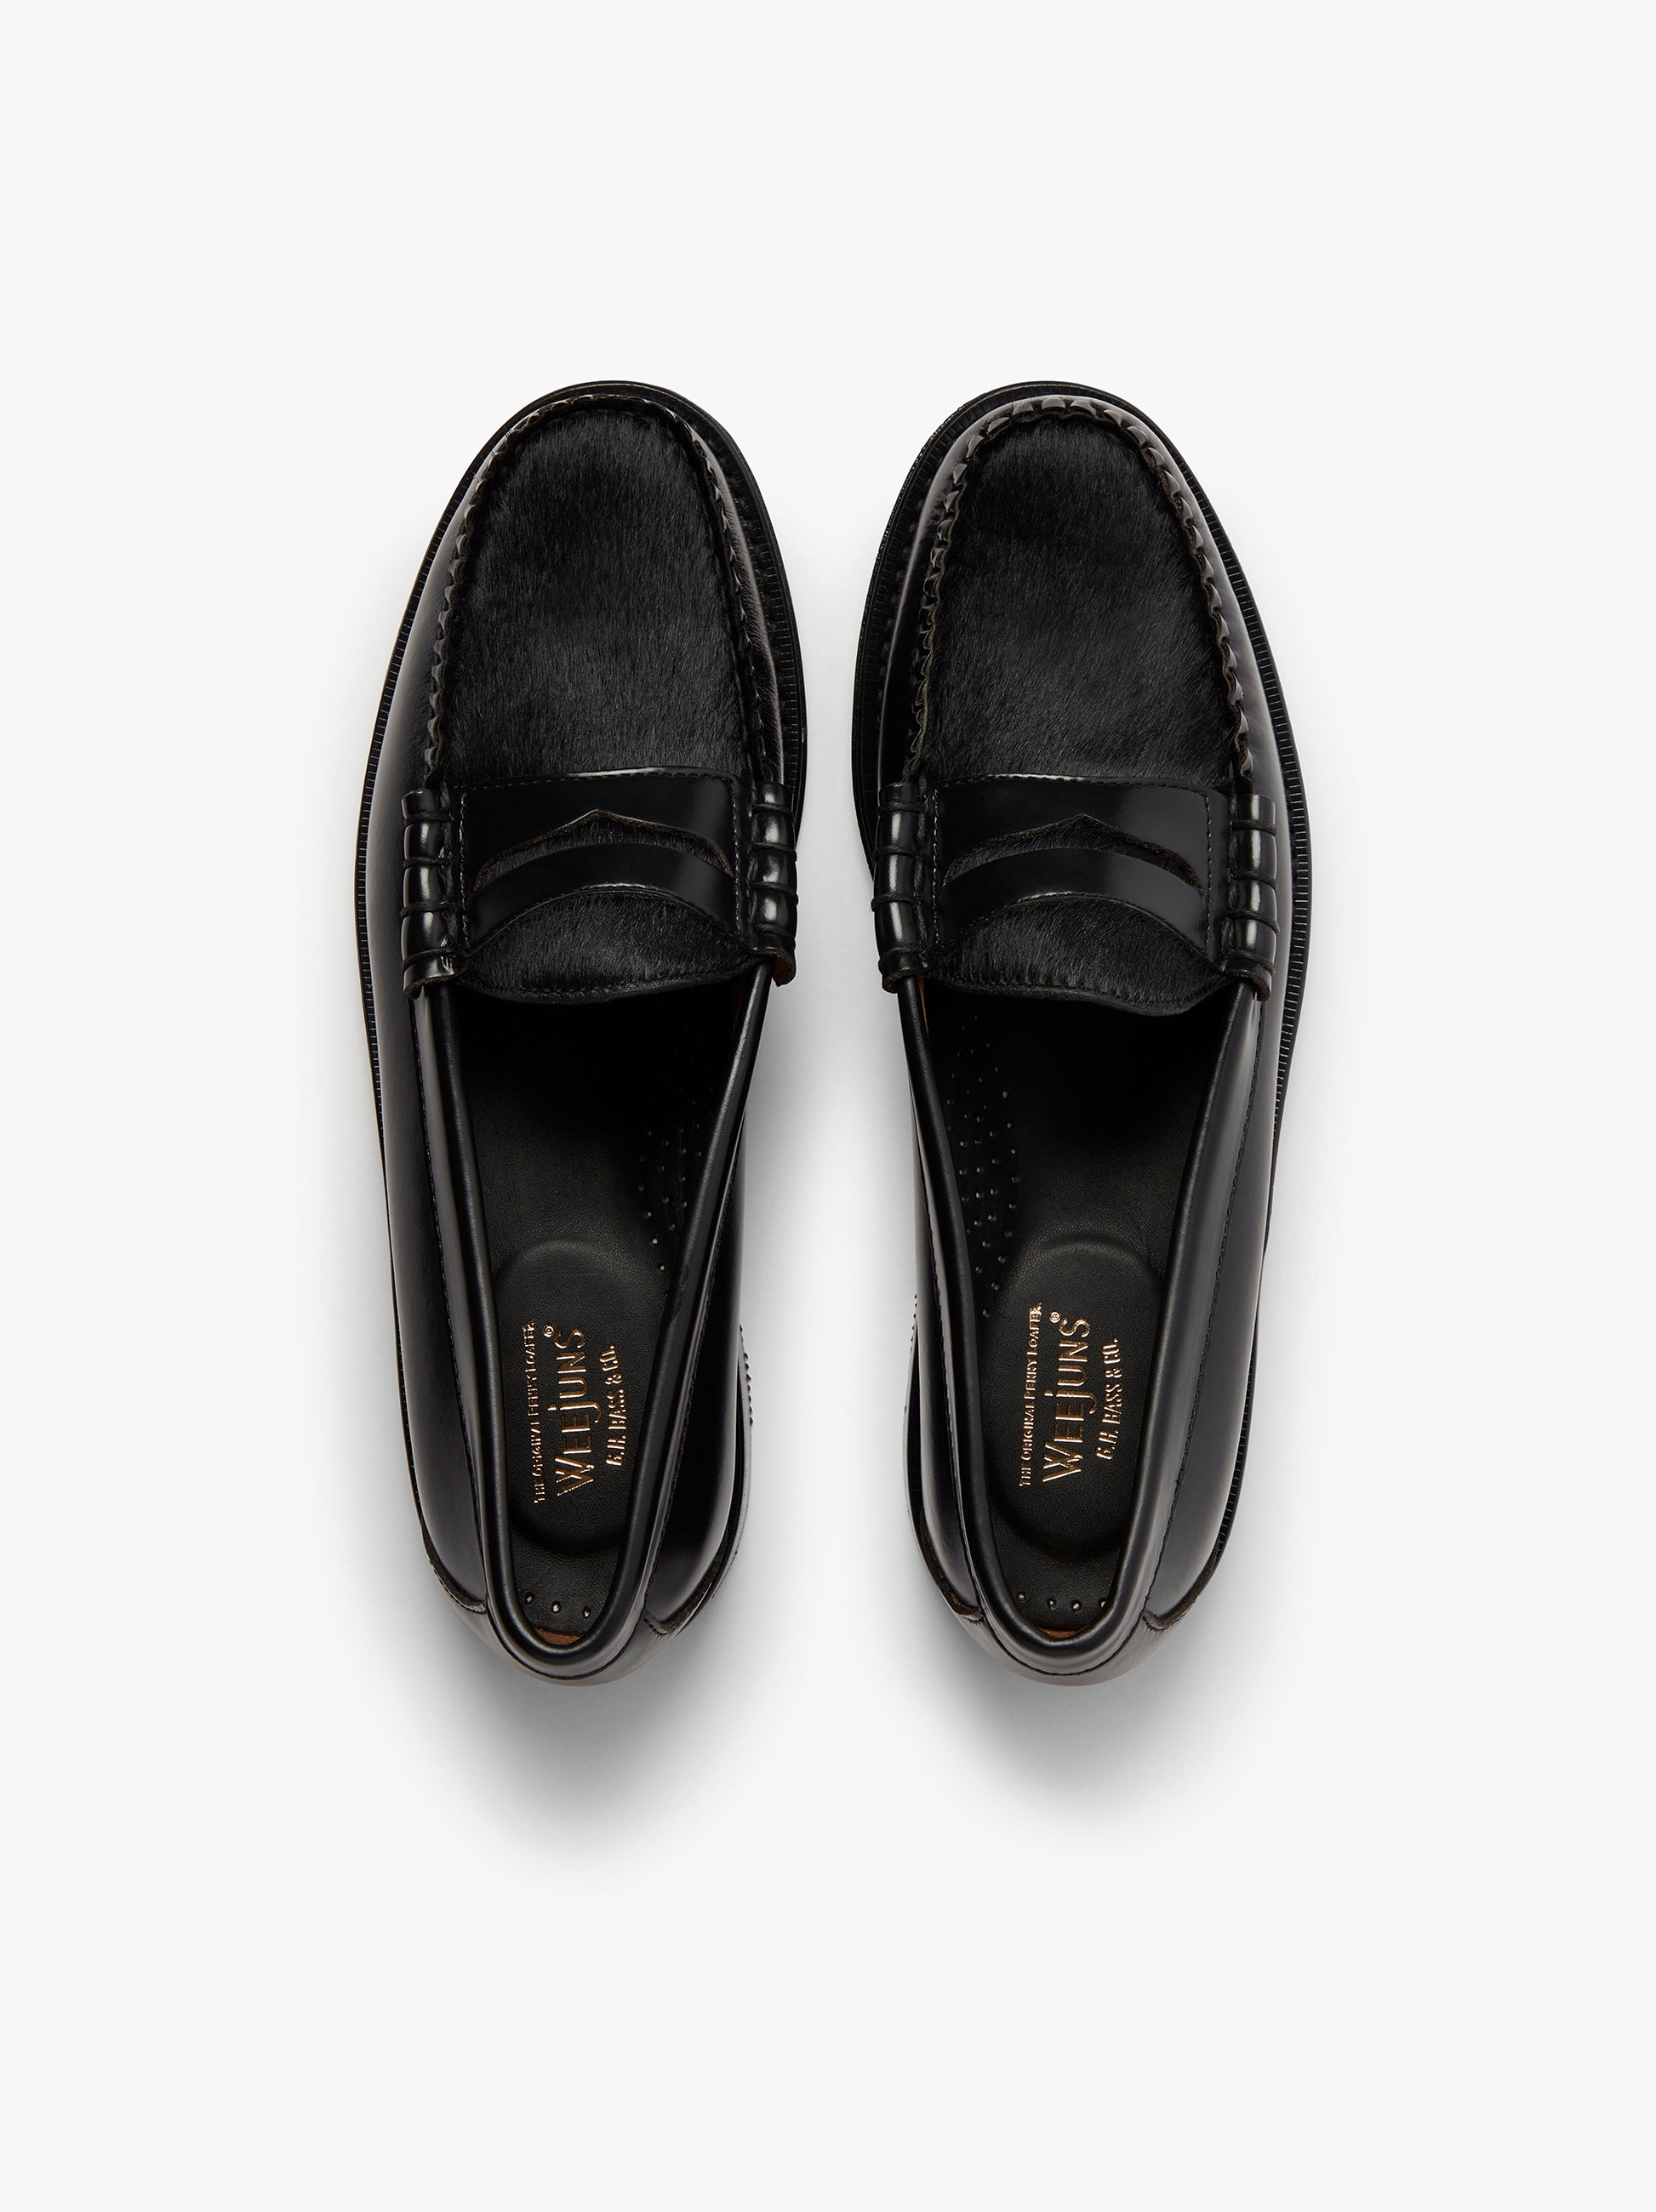 LARSON EXOTIC MIX / BLACK & ZEBRA - 靴